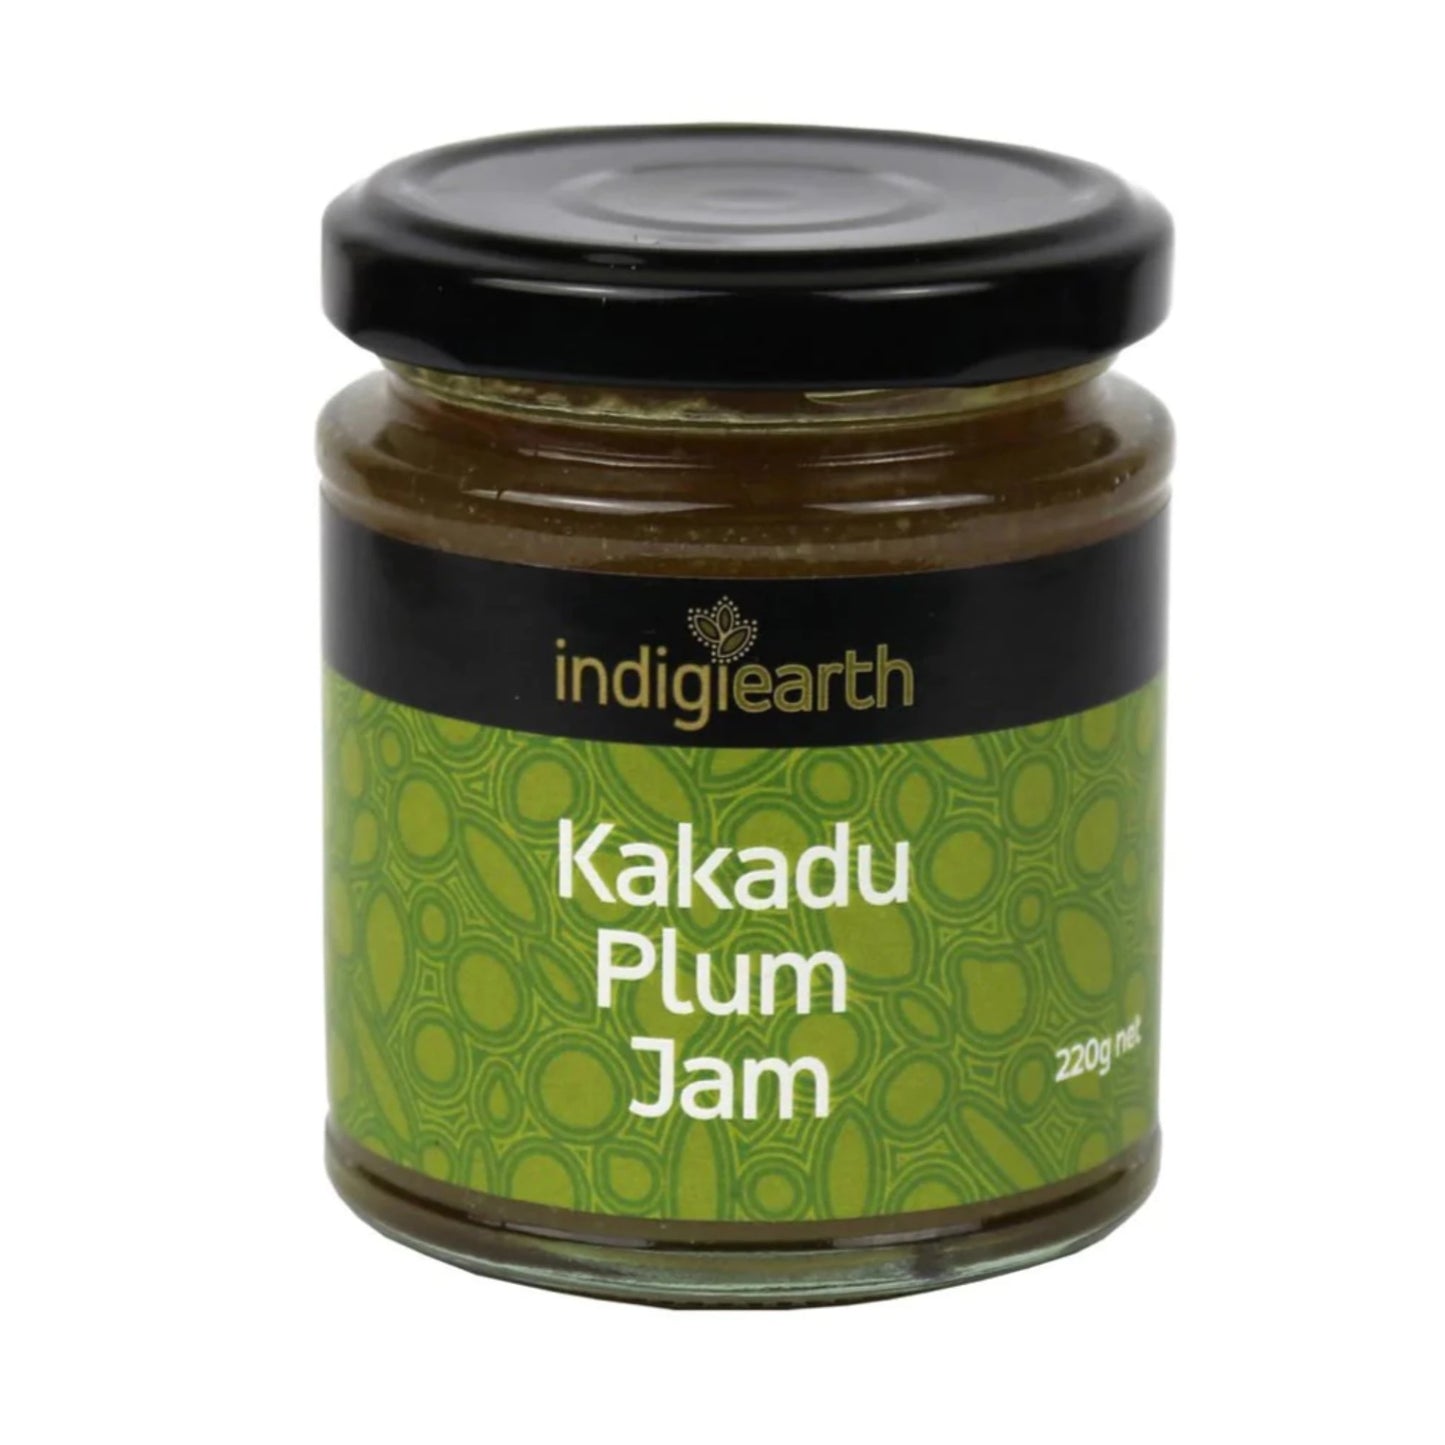 Indigiearth - Kakadu Plum Jam 220g